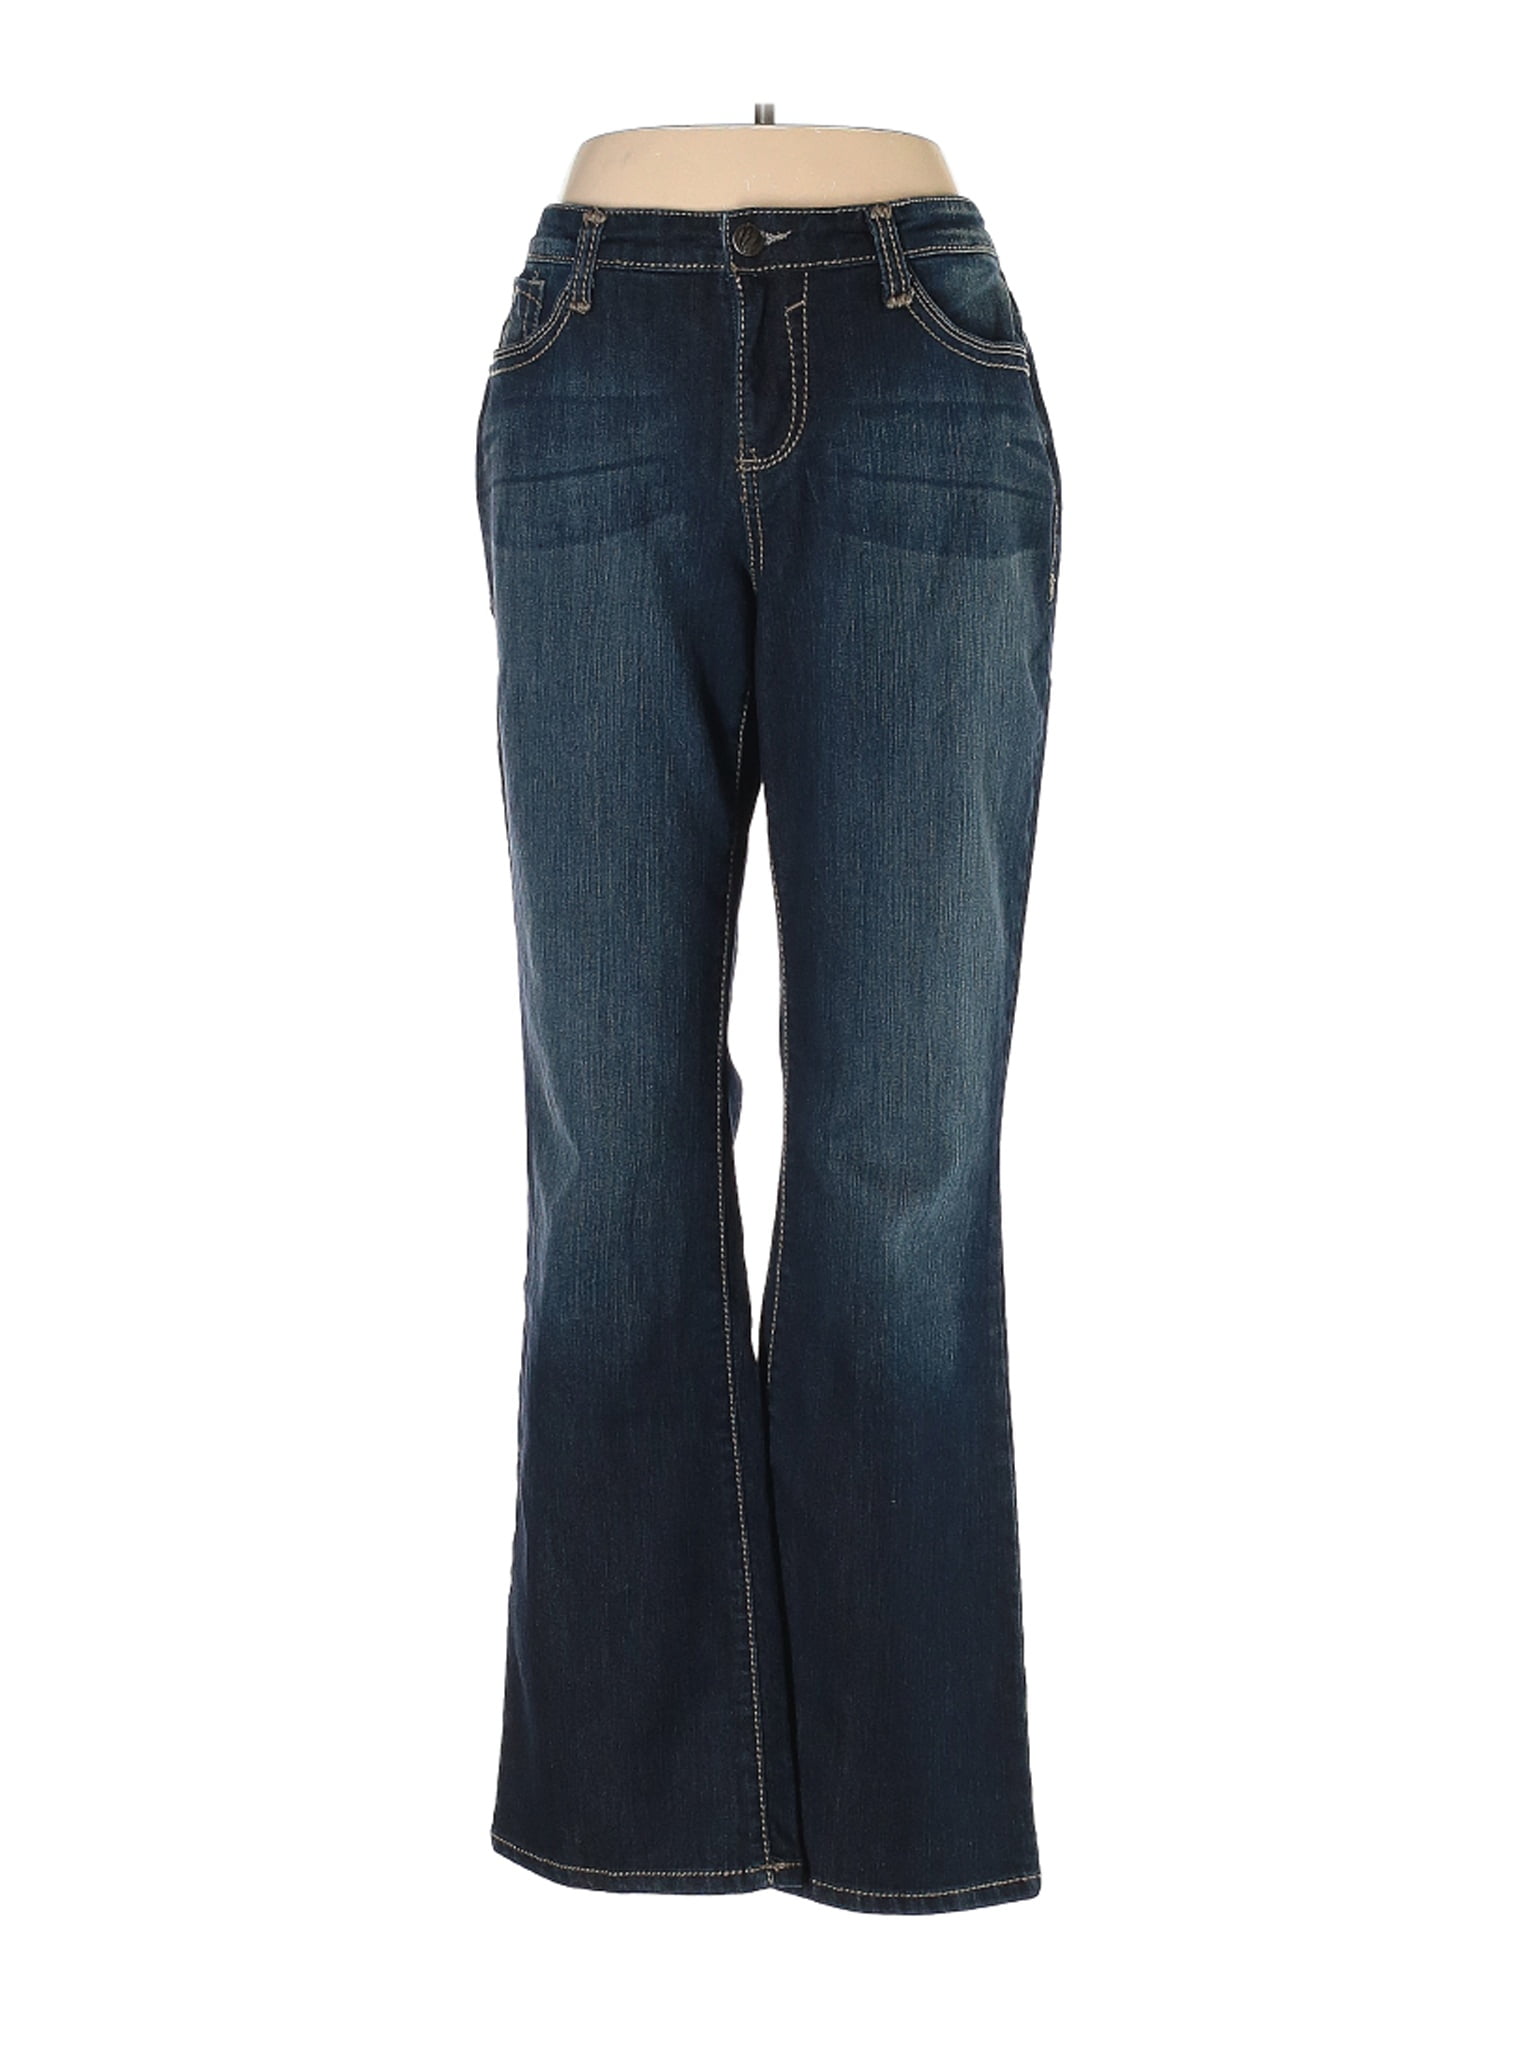 Nine West - Pre-Owned Nine West Women's Size 12 Jeans - Walmart.com ...